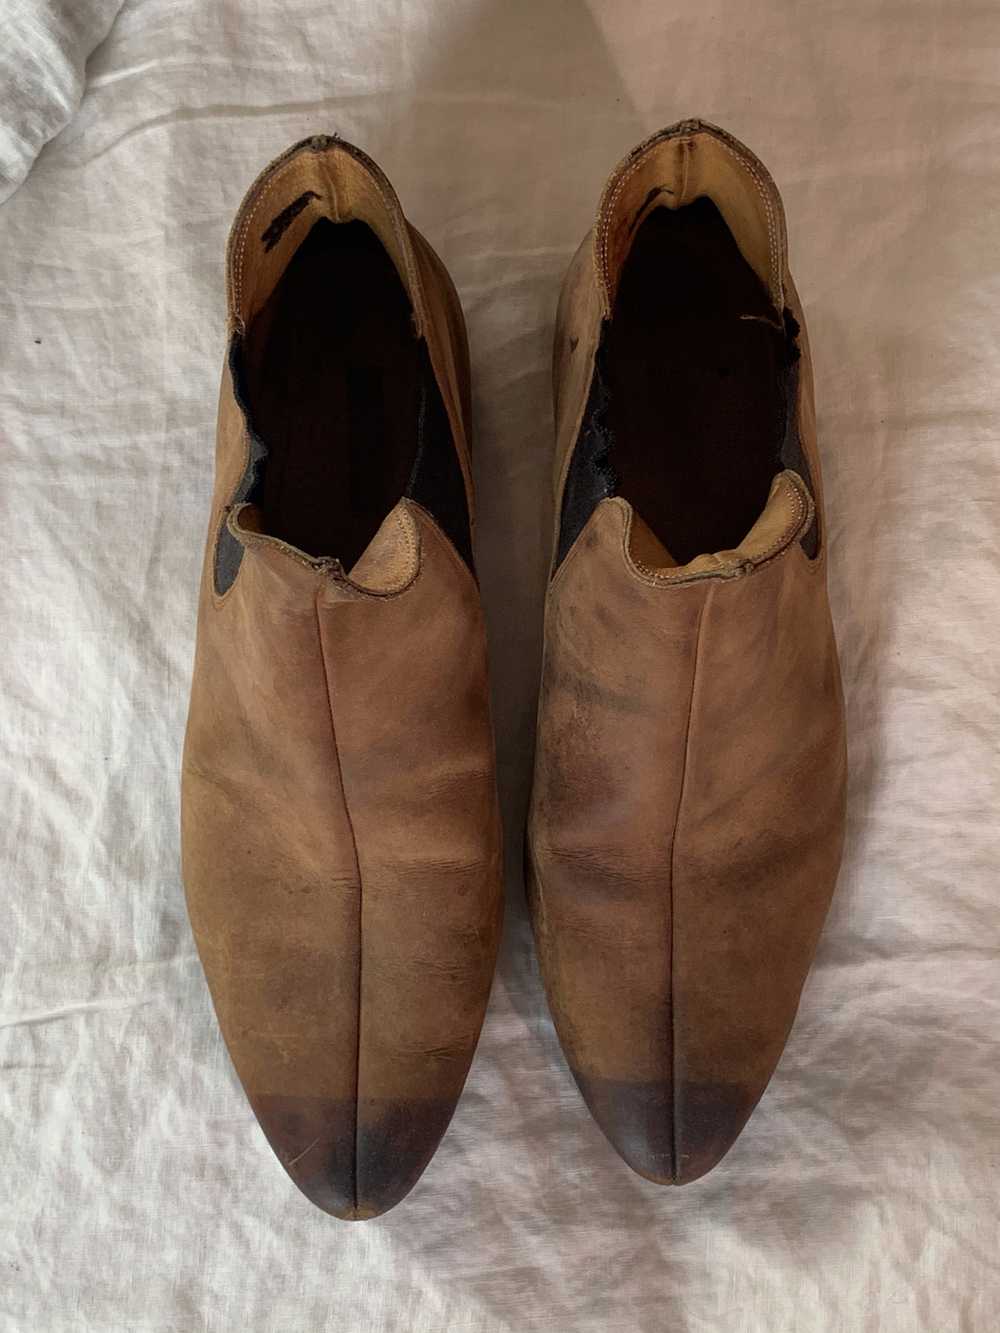 Vintage Brown Vintage Chelsea Boots - image 2